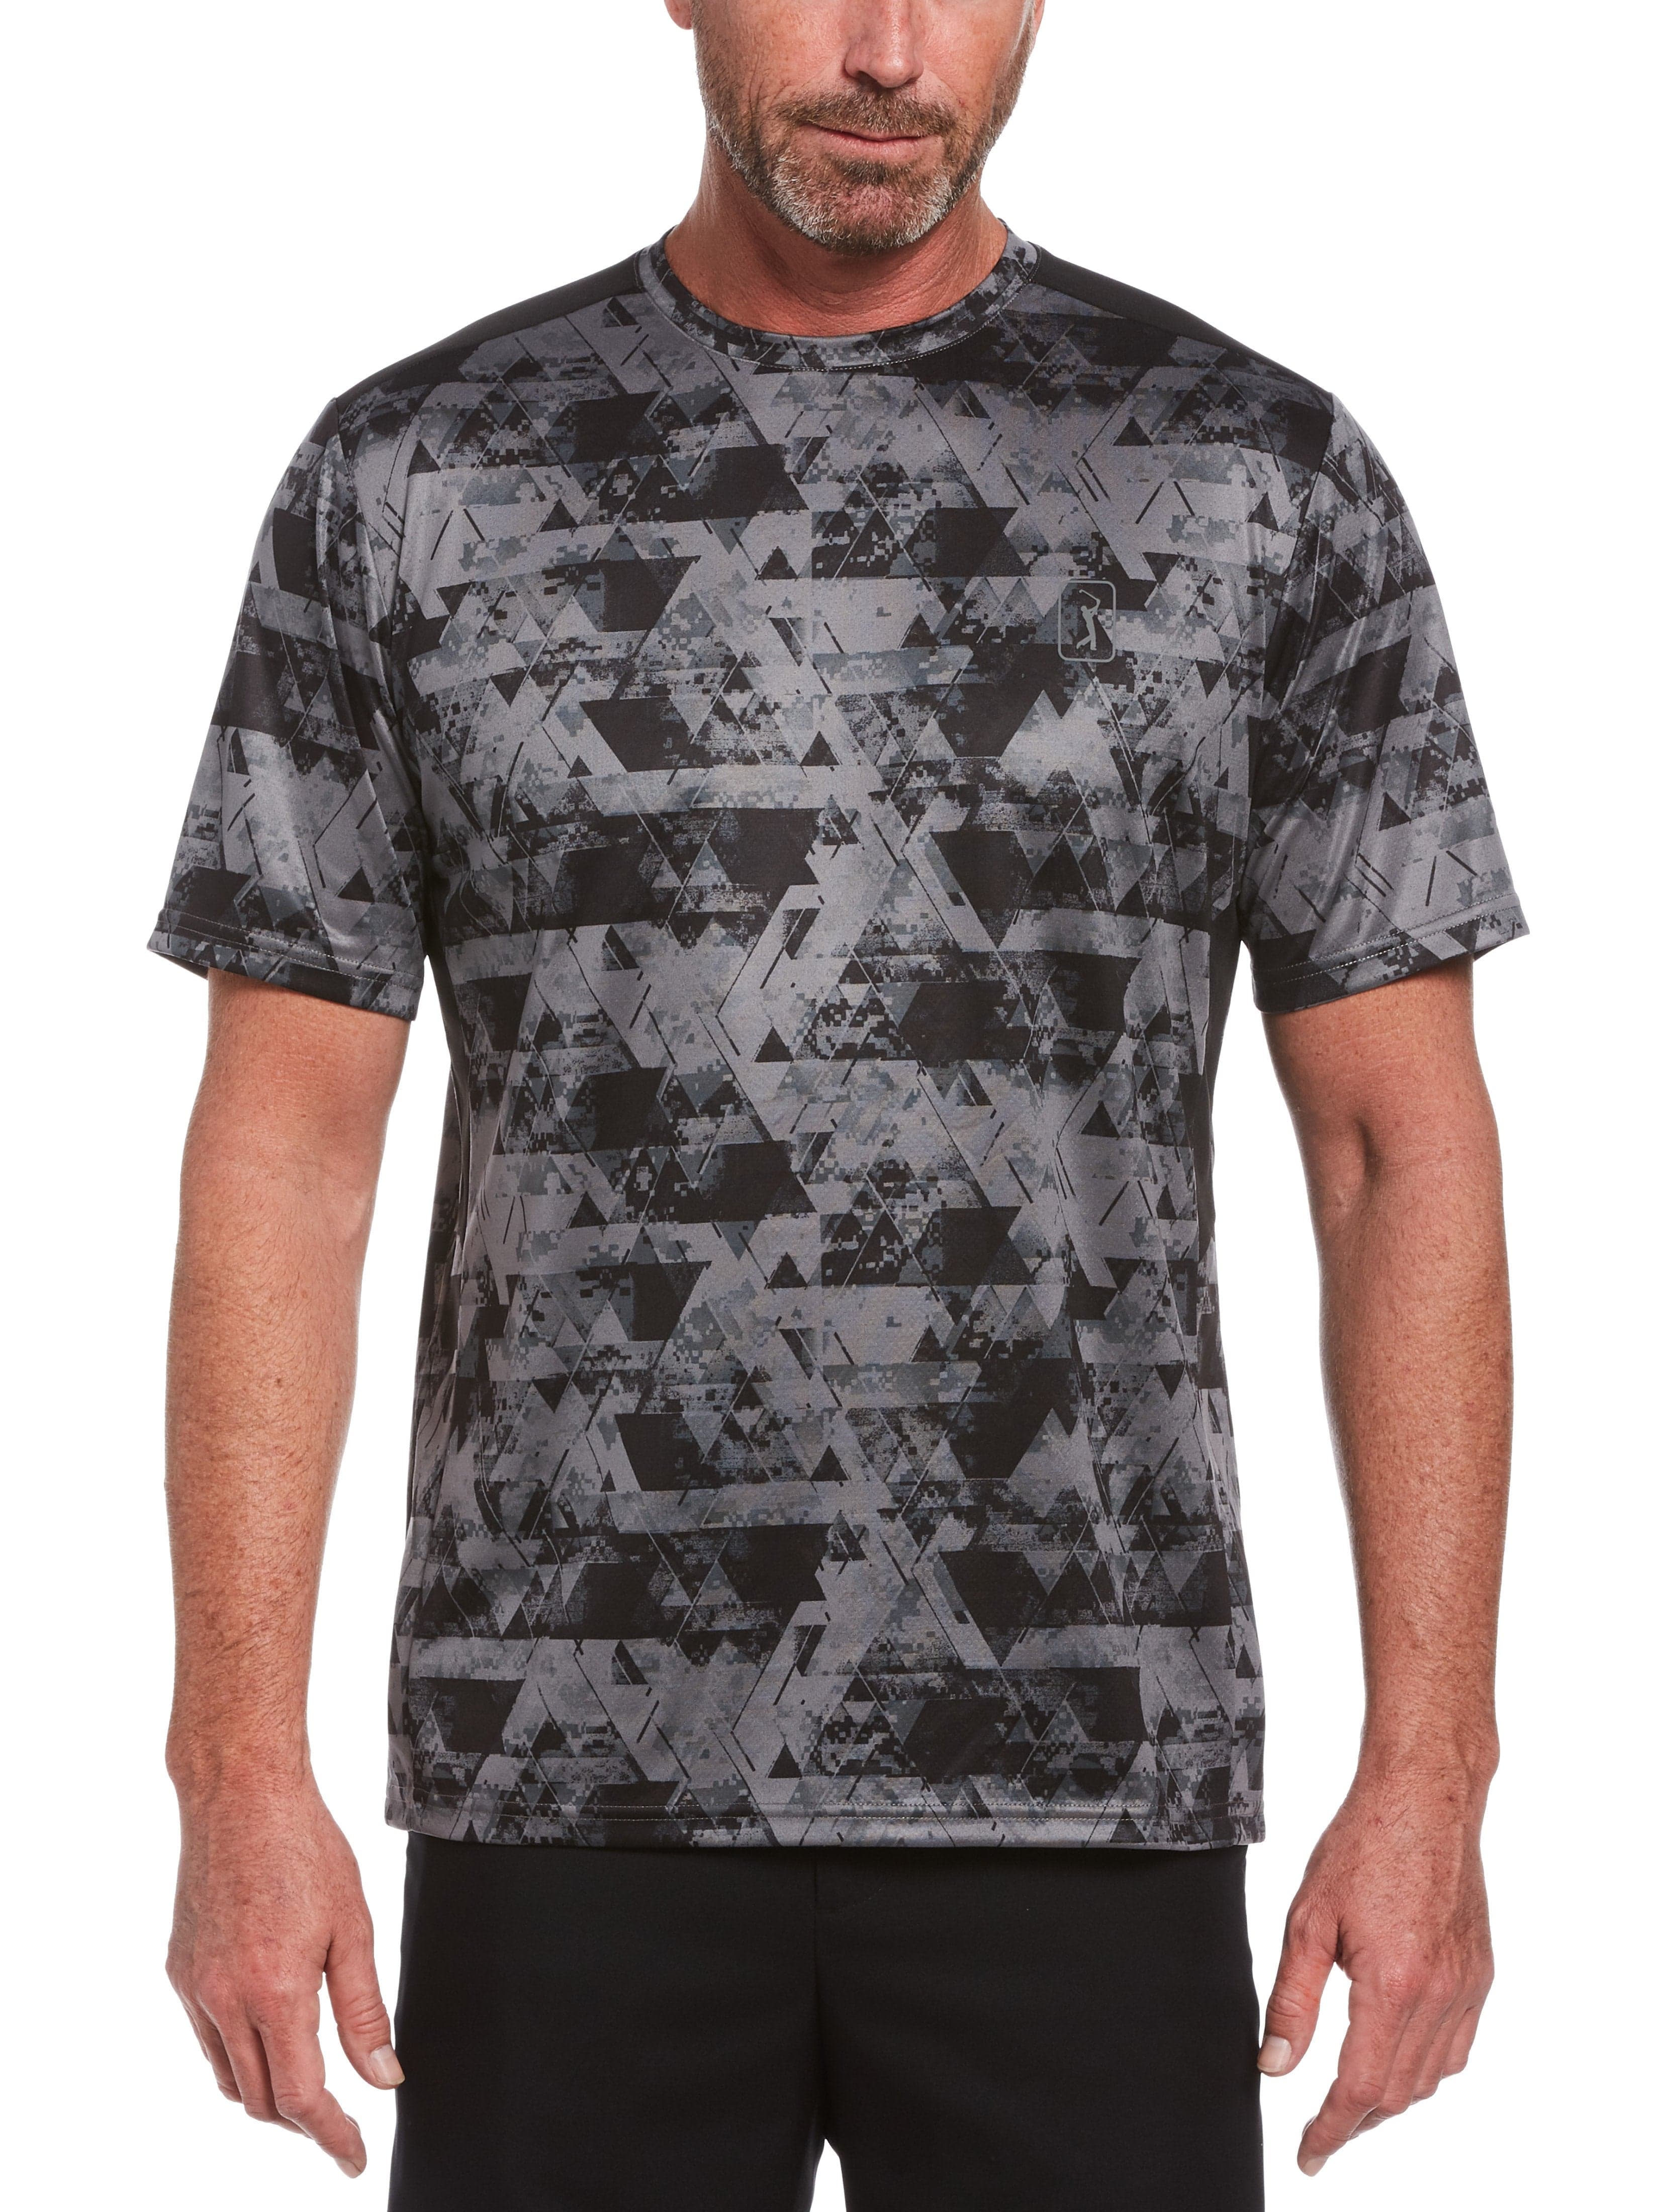 PGA TOUR Apparel Mens Camo Geo Print T-Shirt, Size Large, Black, 100% Polyester | Golf Apparel Shop